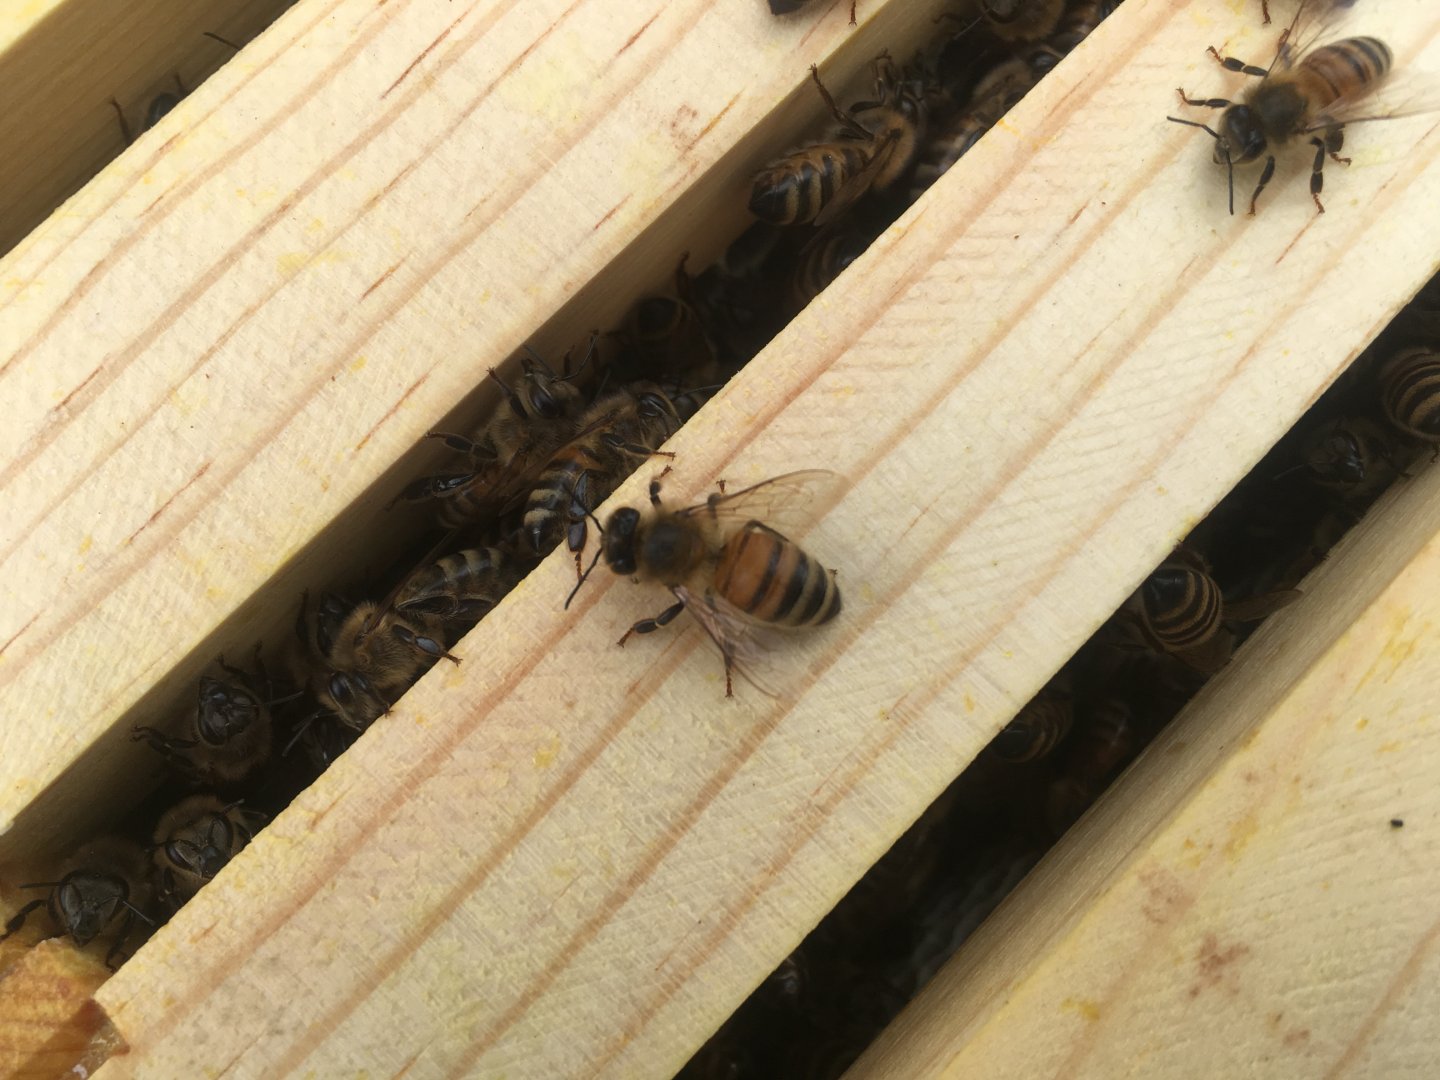 Bees between hive frames